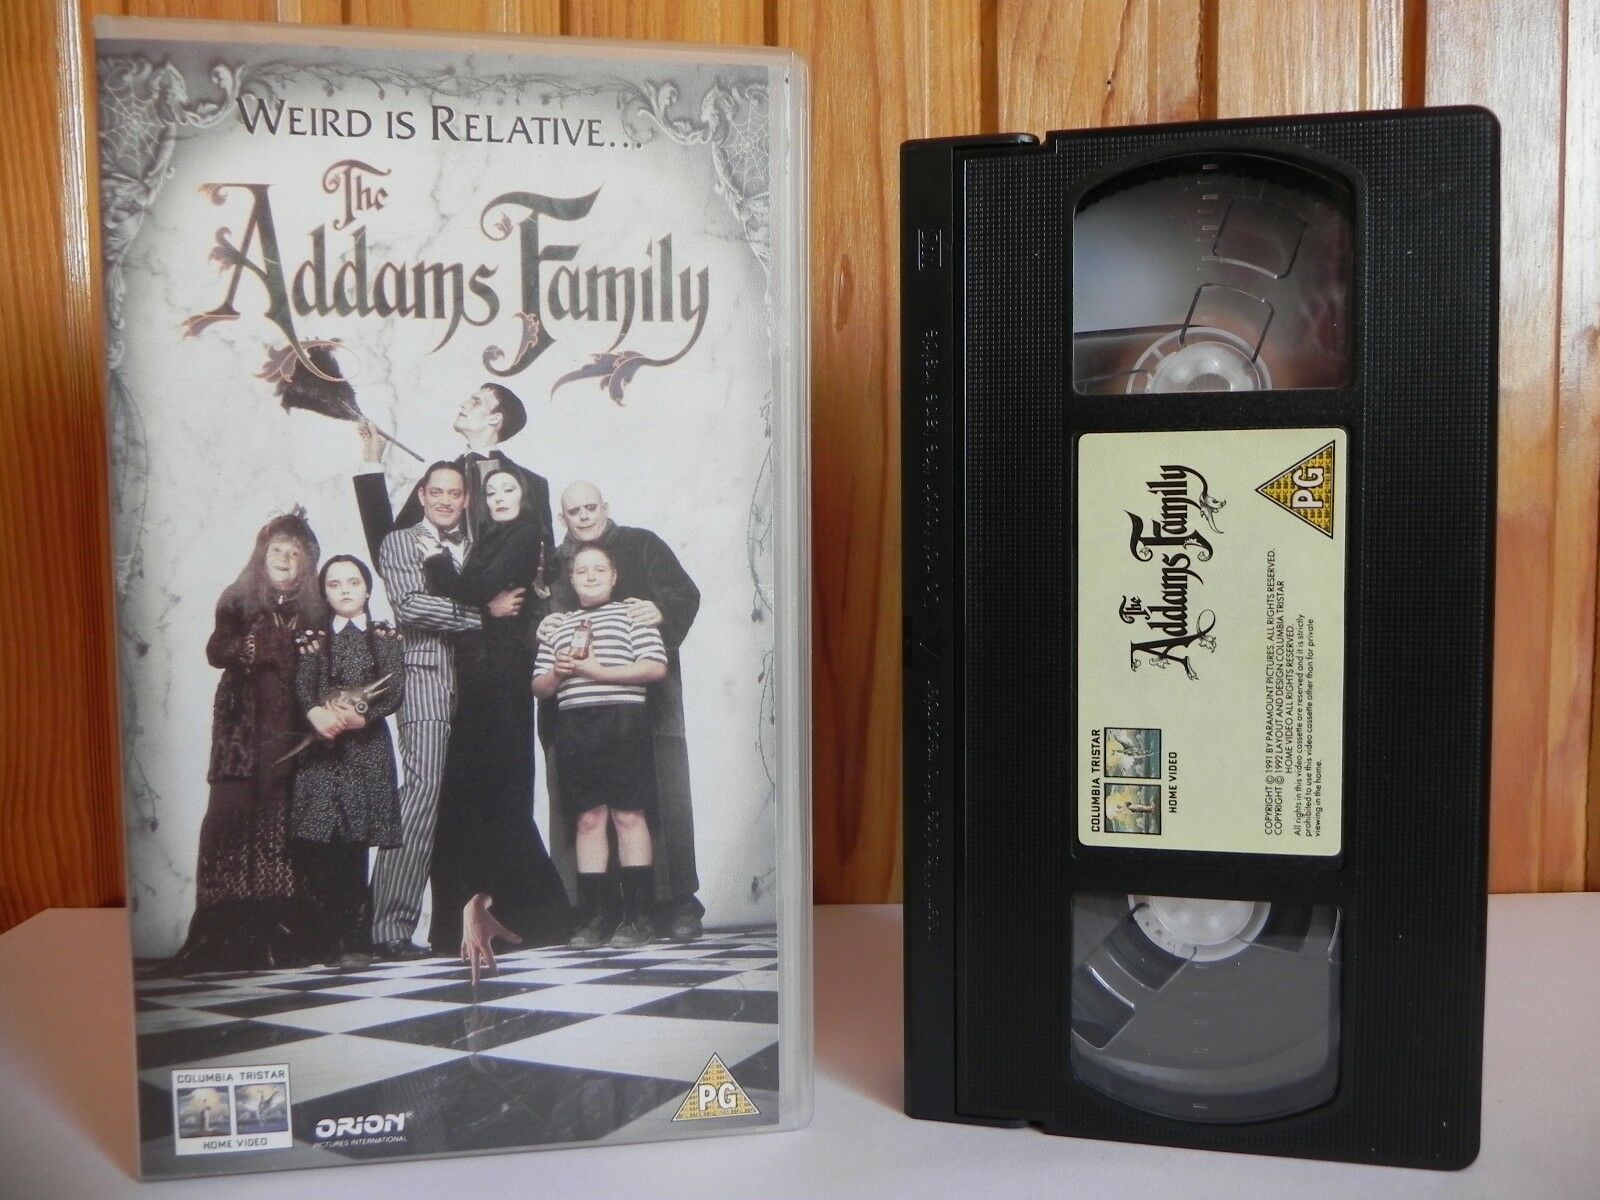 The Addams Family - Columbia Tristar - Black Comedy - Raul Julia - Pal VHS-